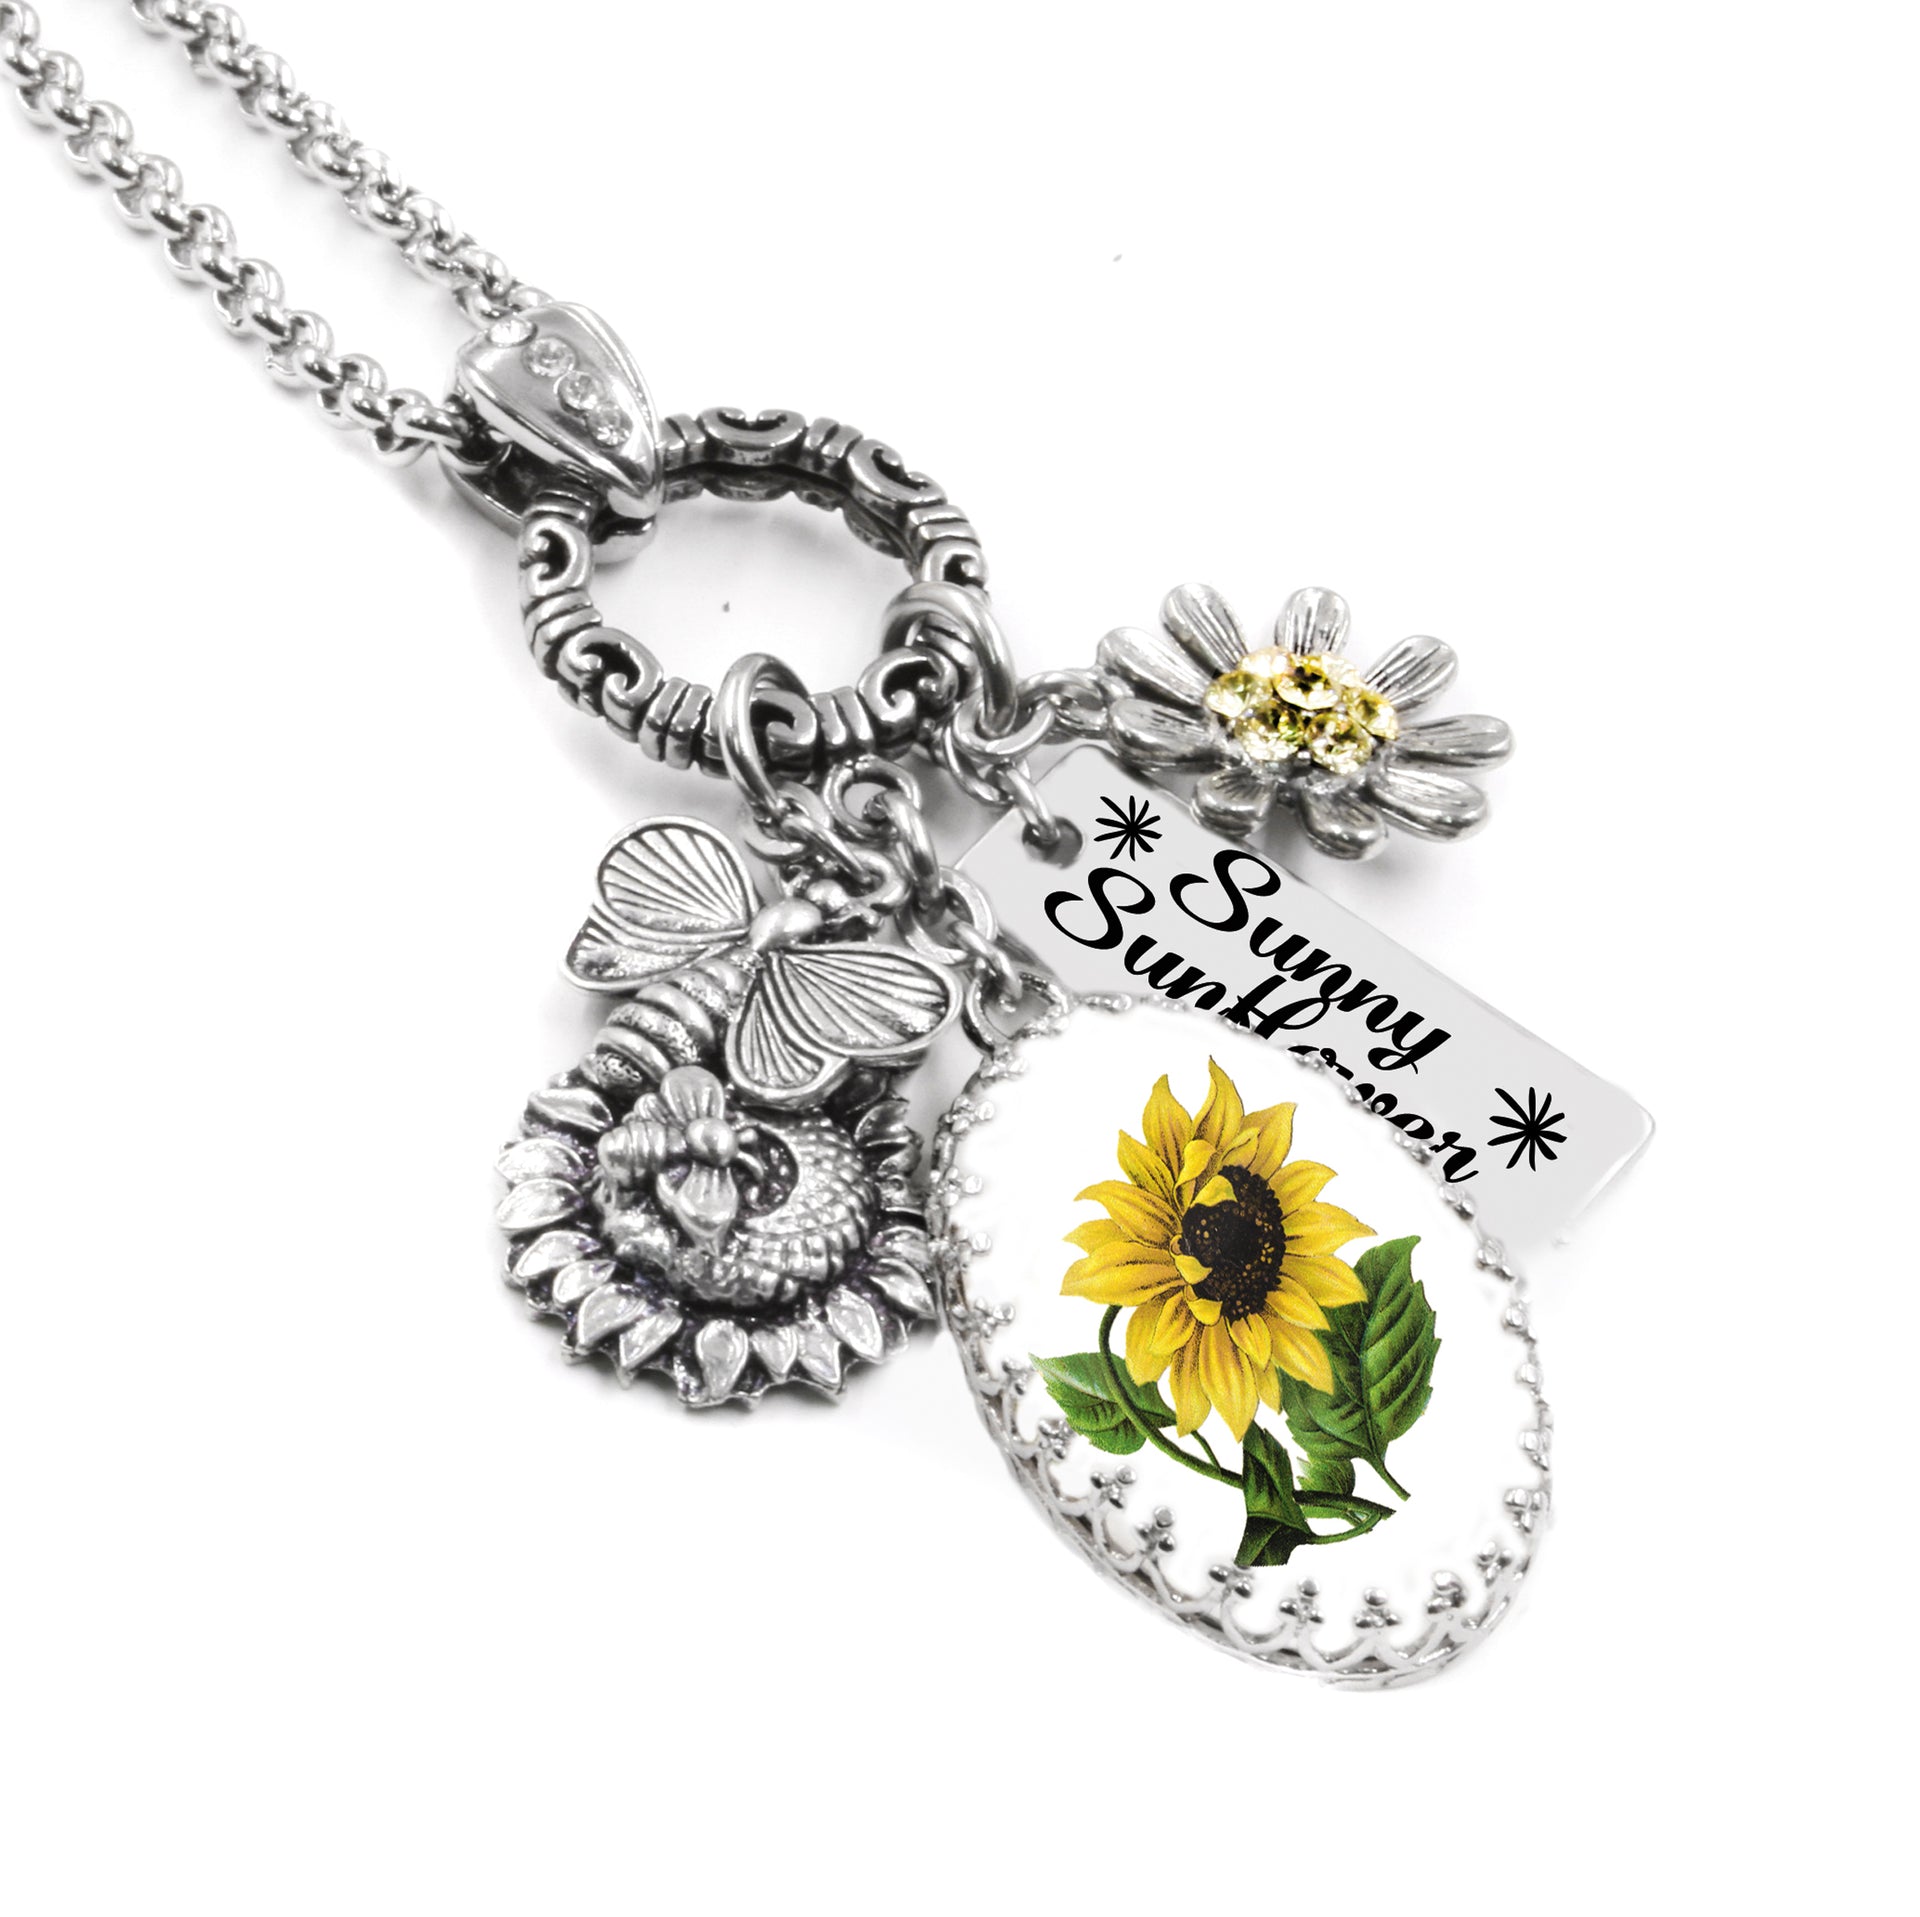 Sunflower charm necklace